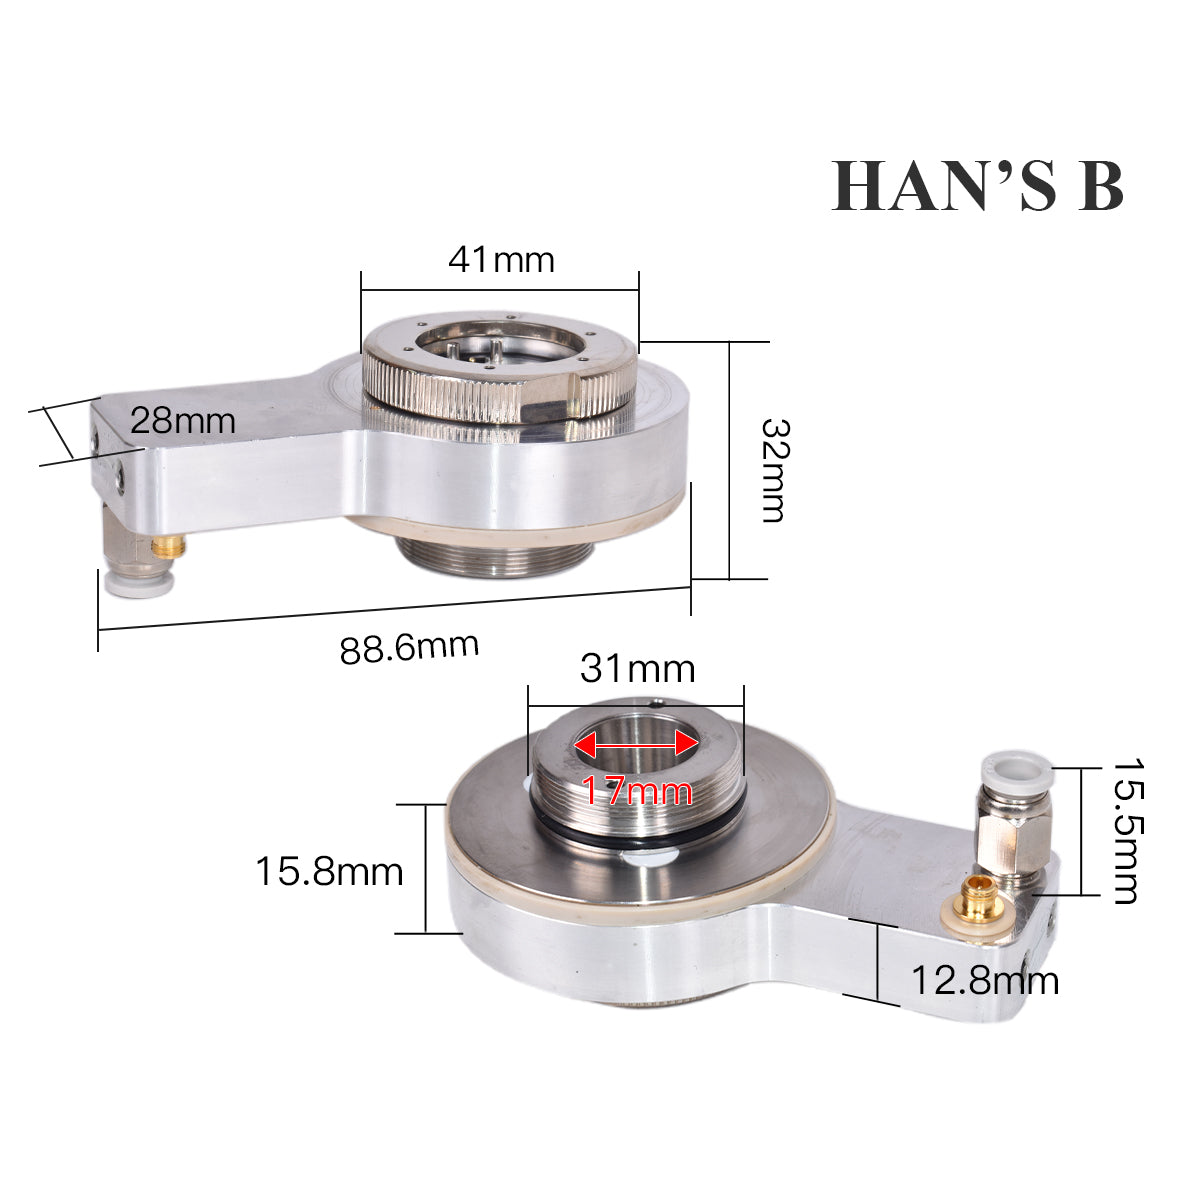 Startnow Han's Laser Nozzle Sensor Connector Ceramic Holder Part For HANS Fiber Laser Cutting Machine